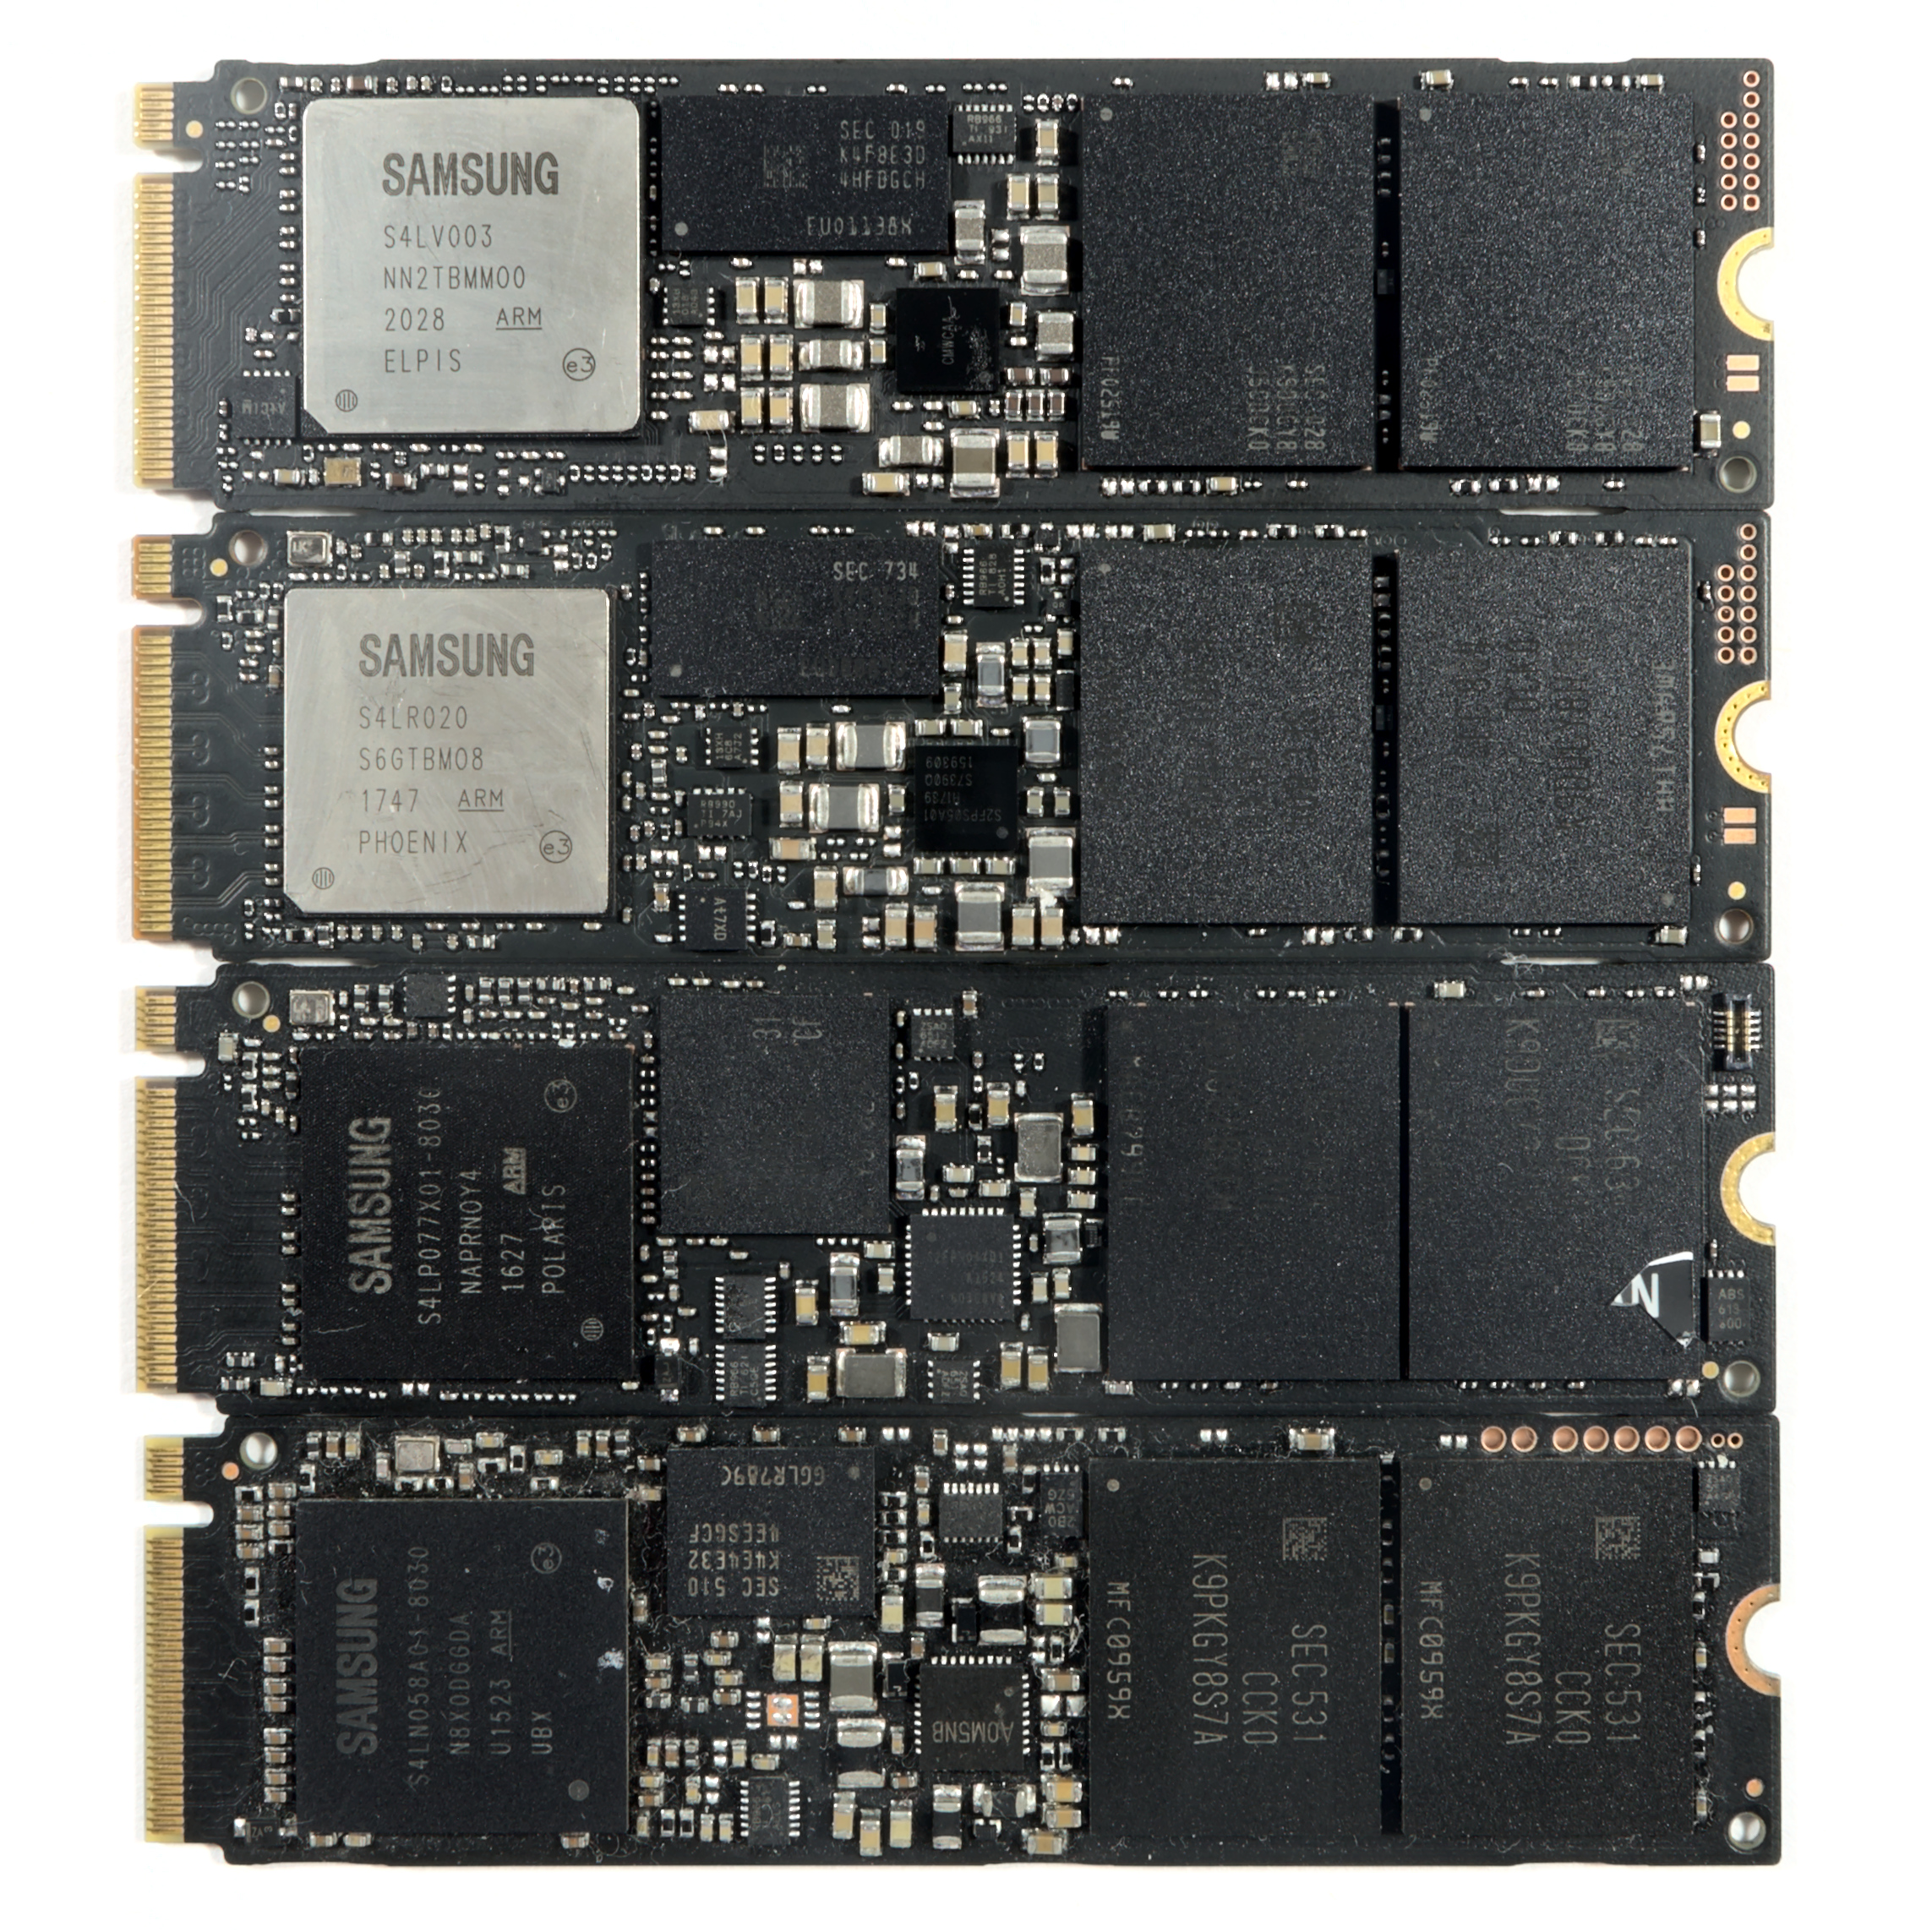 Samsung 980 Pro 1 TB SSD Review - MLC No More